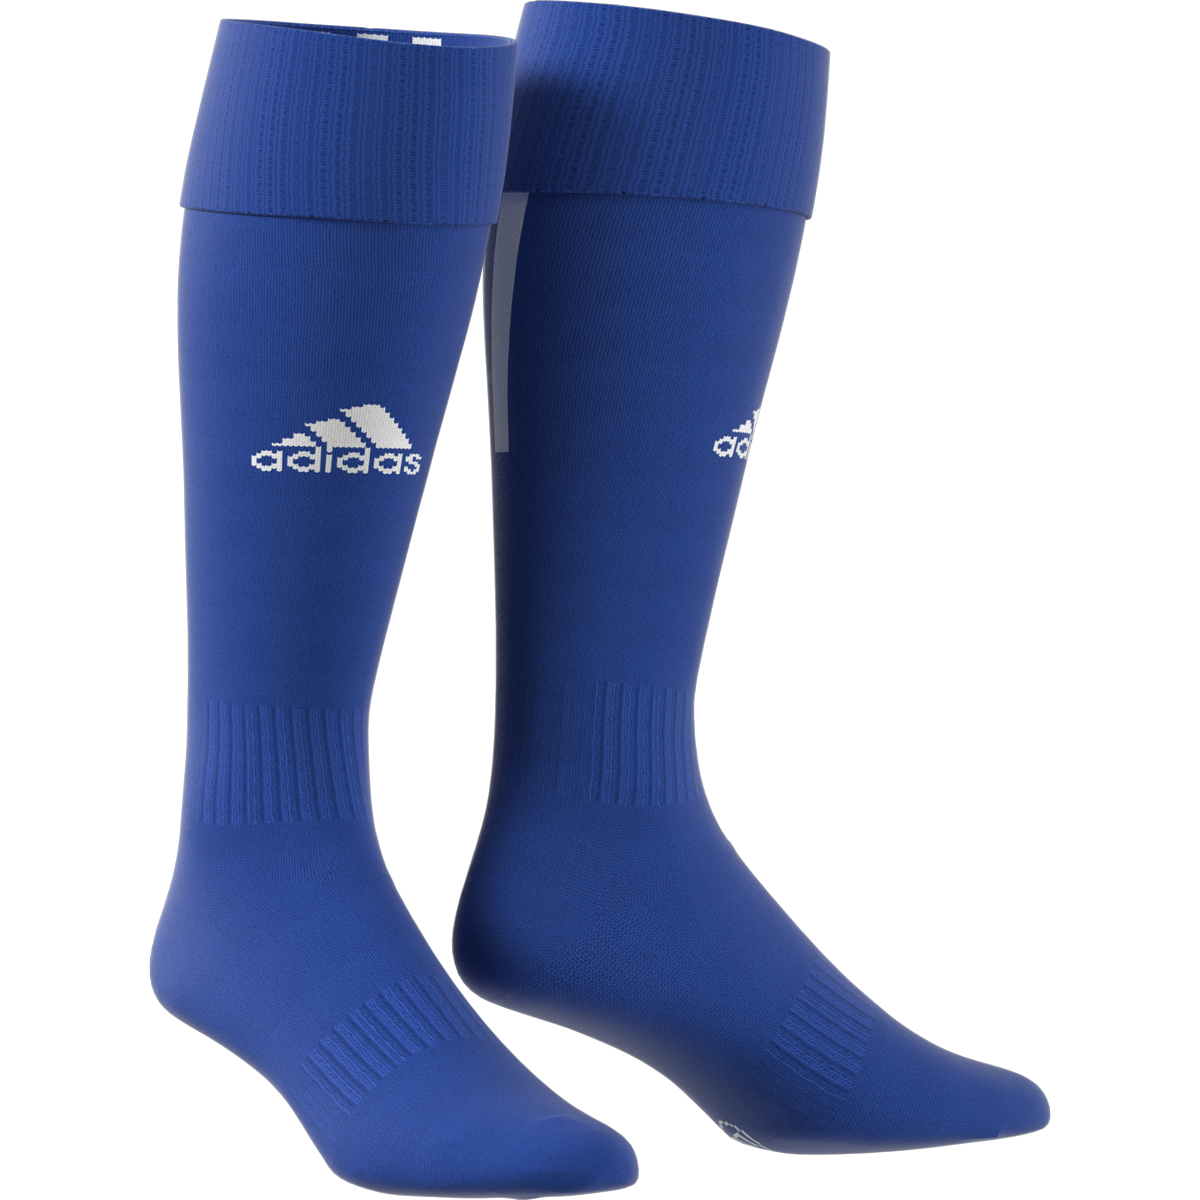 Adidas Santos 18 modrá/bílá EU 43/45